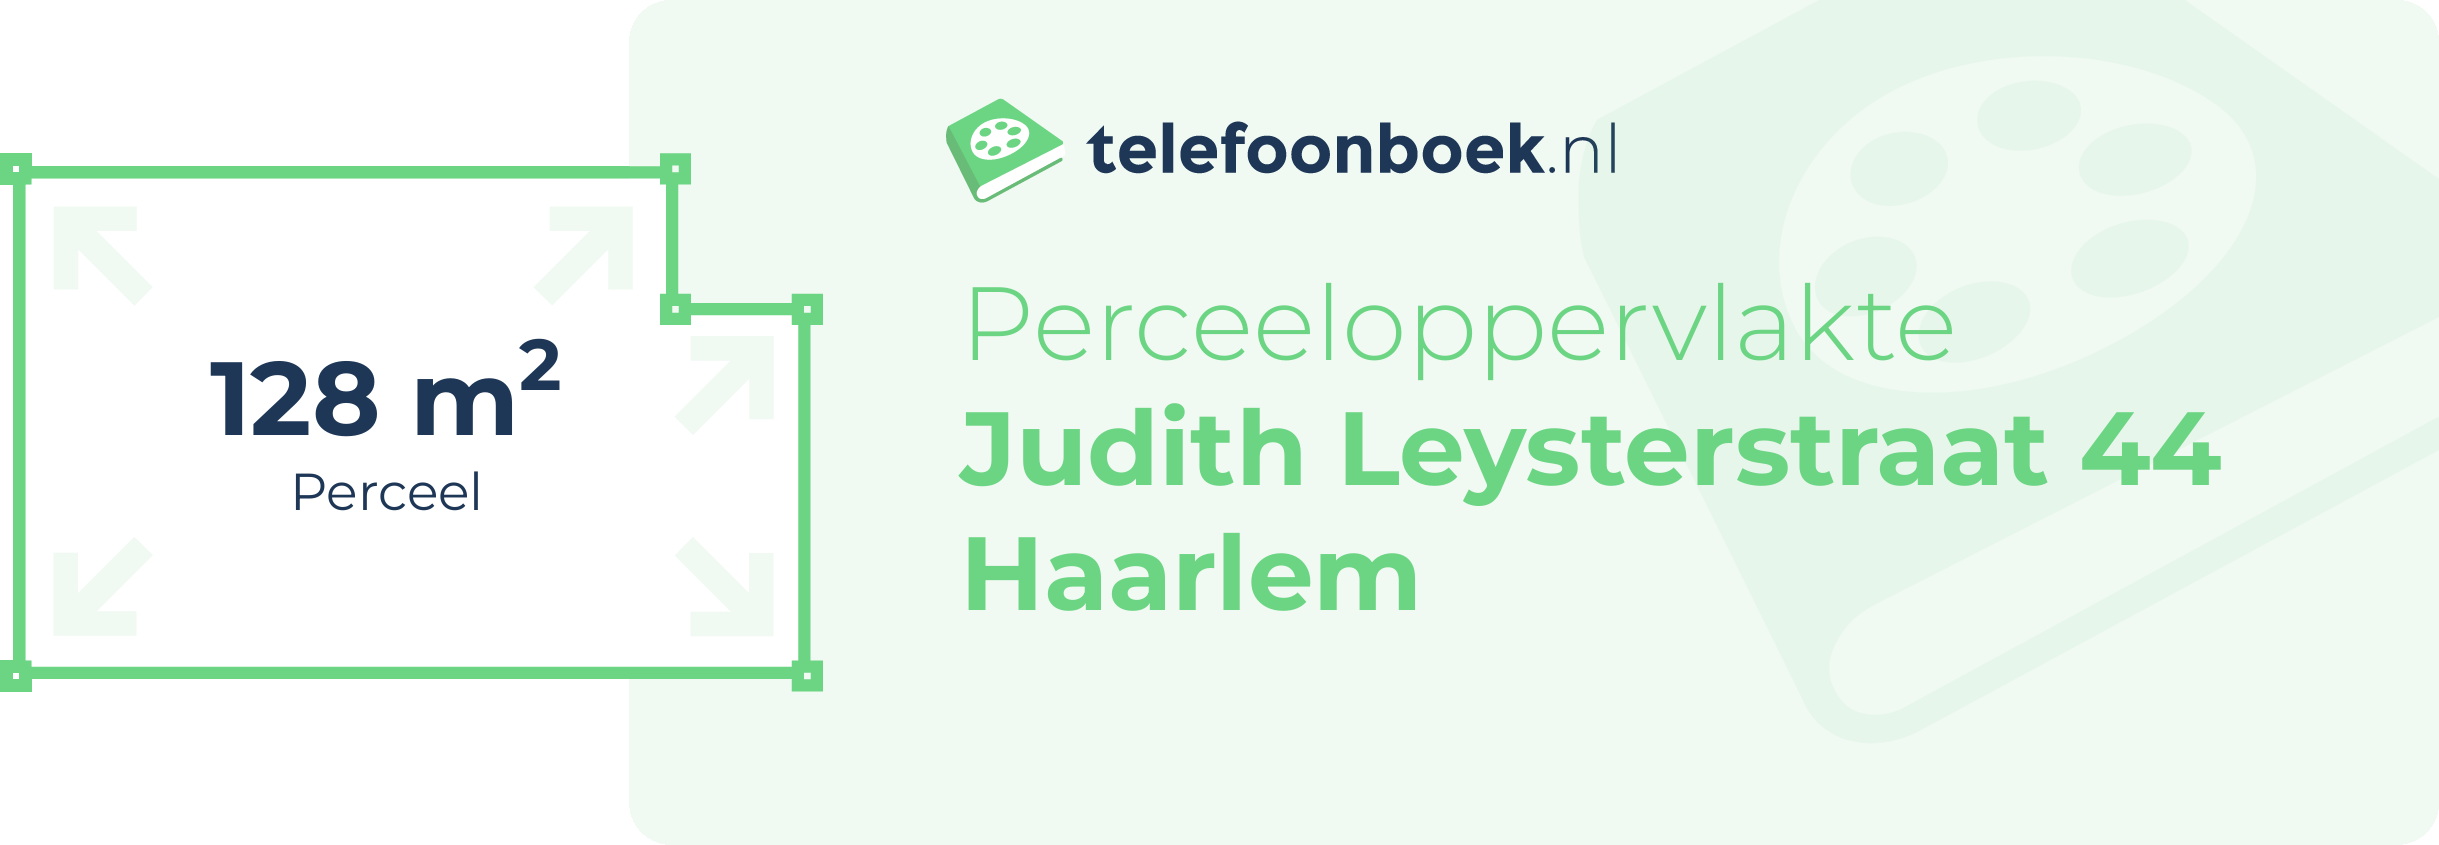 Perceeloppervlakte Judith Leysterstraat 44 Haarlem